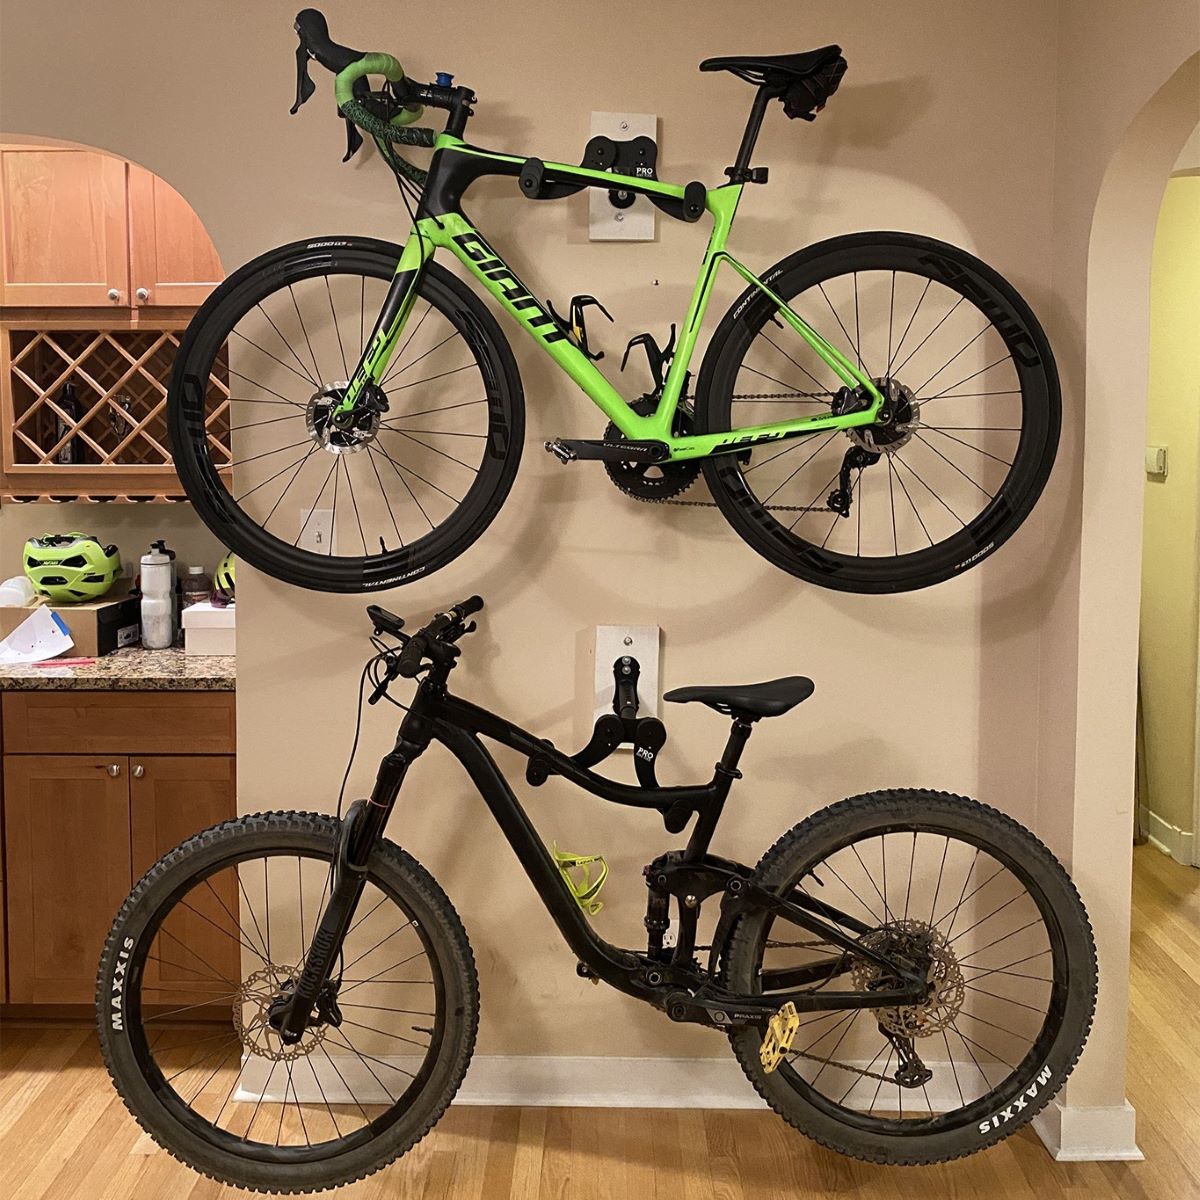 How To Store A Mountain Bike